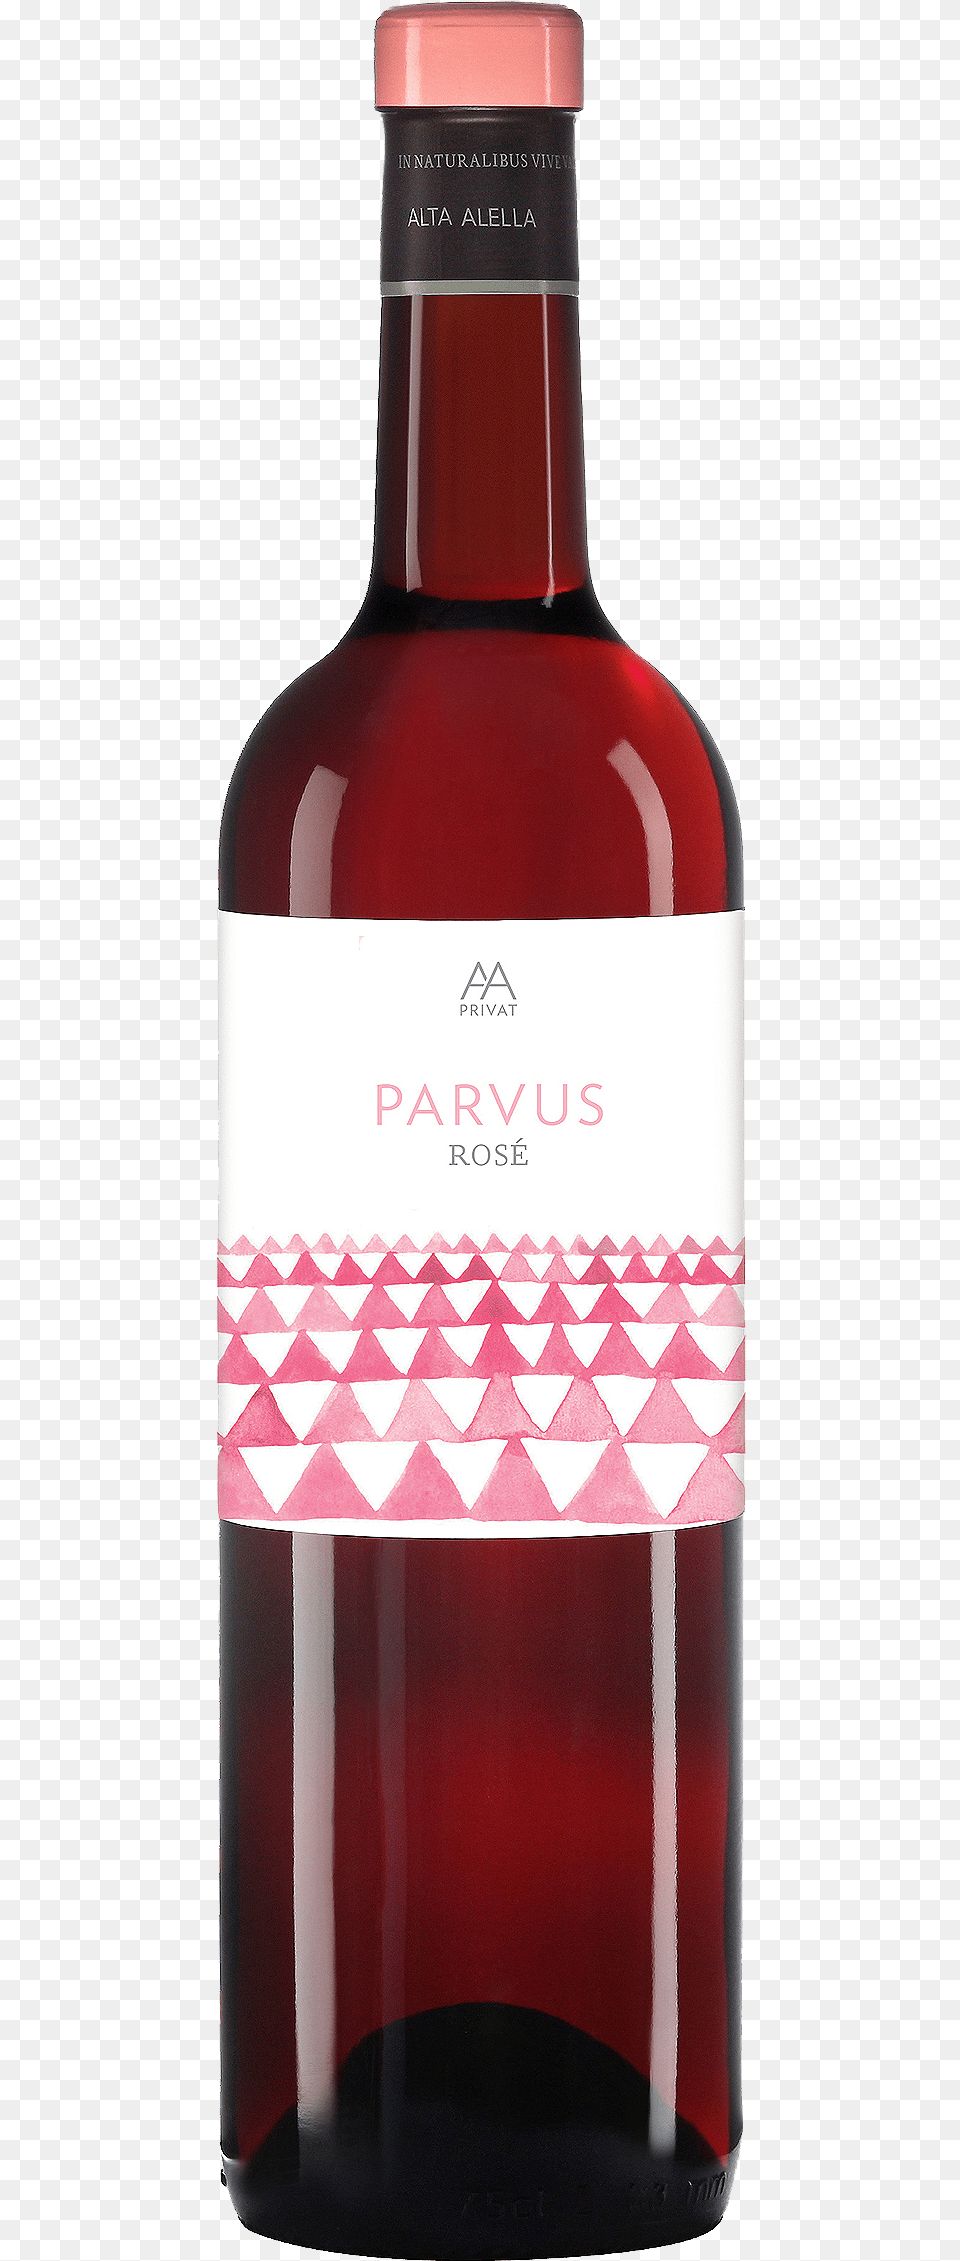 Aa Parvus Rose Wine Bottle, Alcohol, Beverage, Liquor, Red Wine Png Image